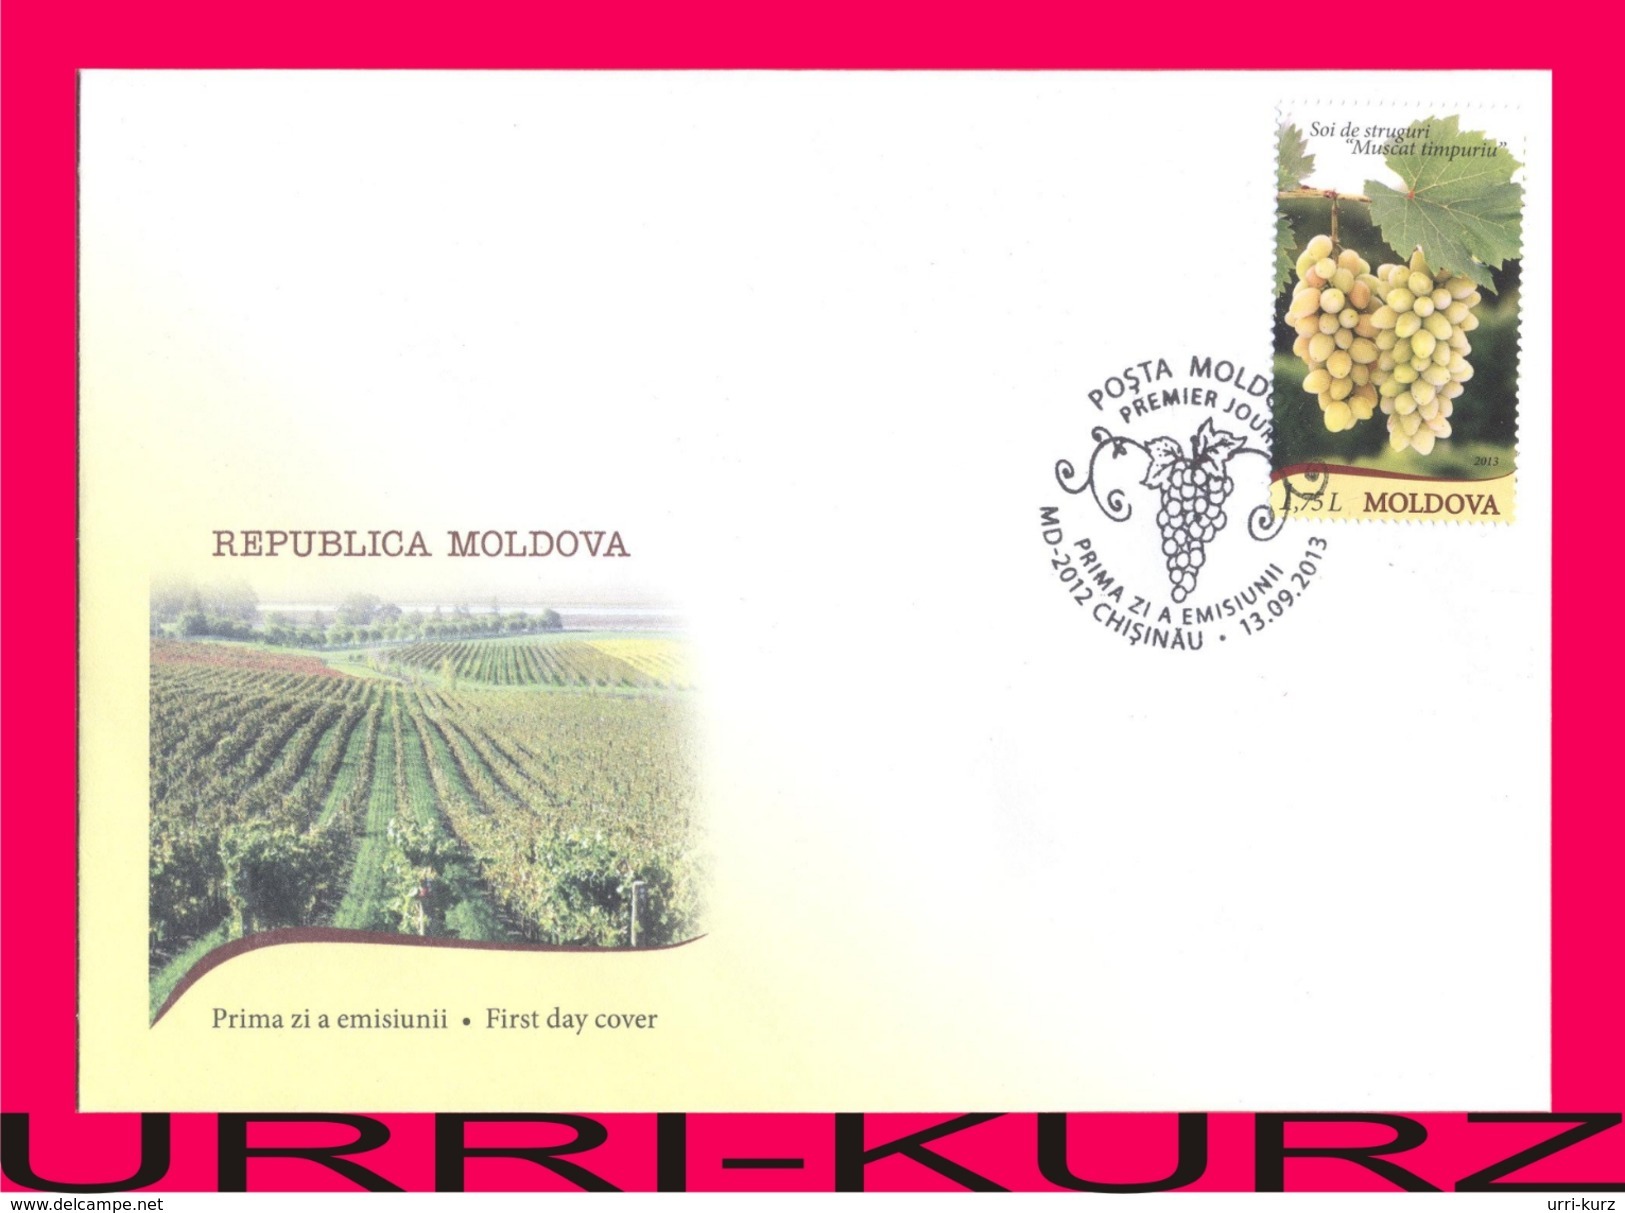 MOLDOVA 2013 Nature Flora Fruits Grapes Fruit Grape Muscat Vineyards Winemaking Mi849 Sc804 FDC - Agriculture